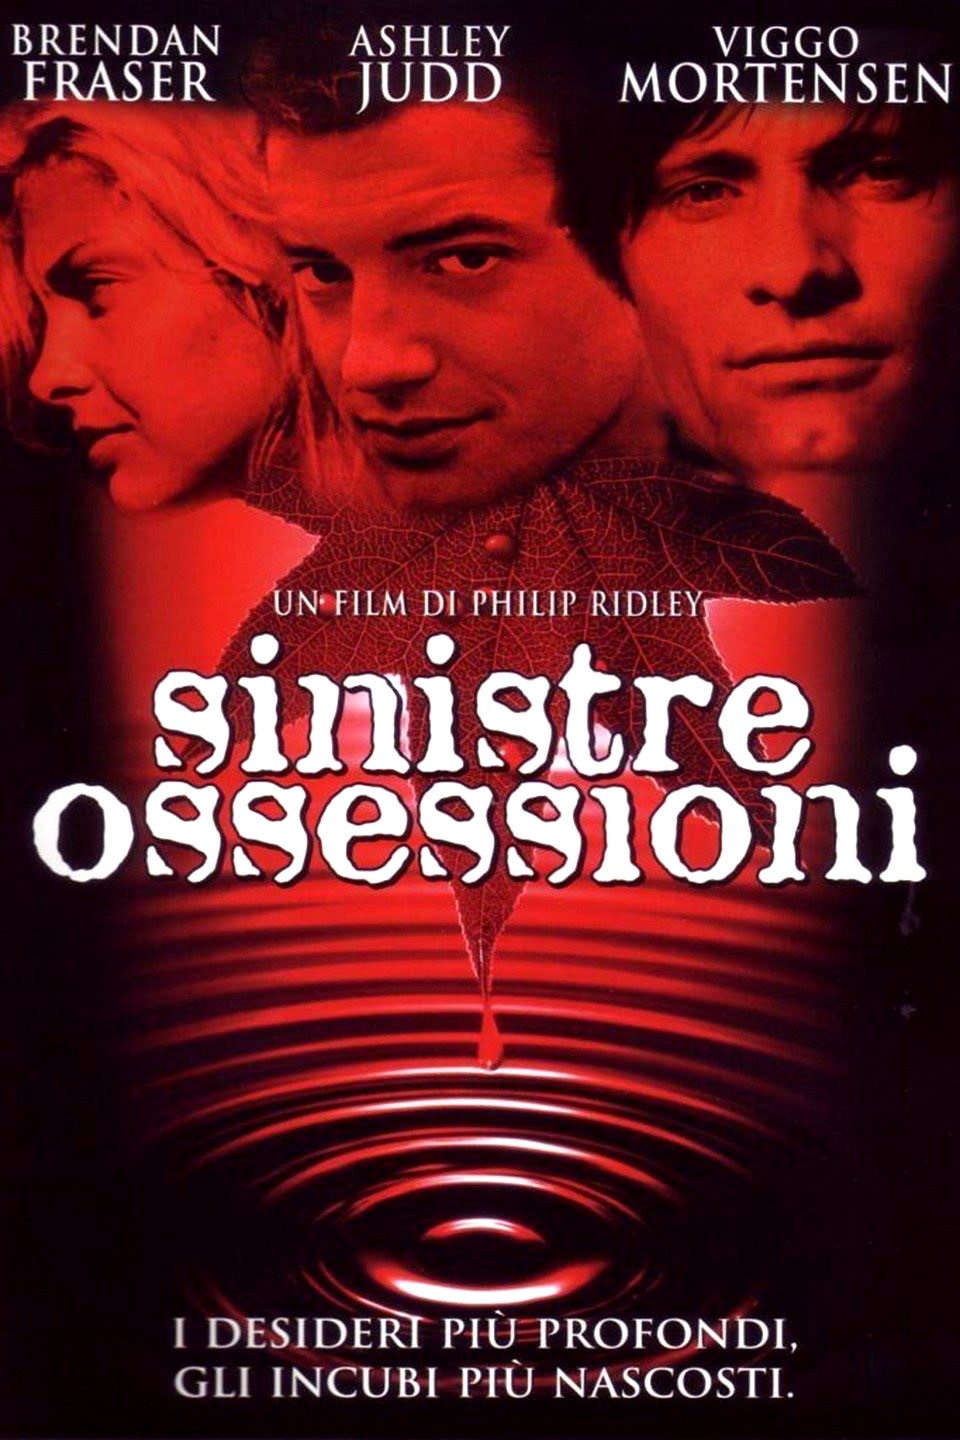 Sinistre ossessioni (1995)